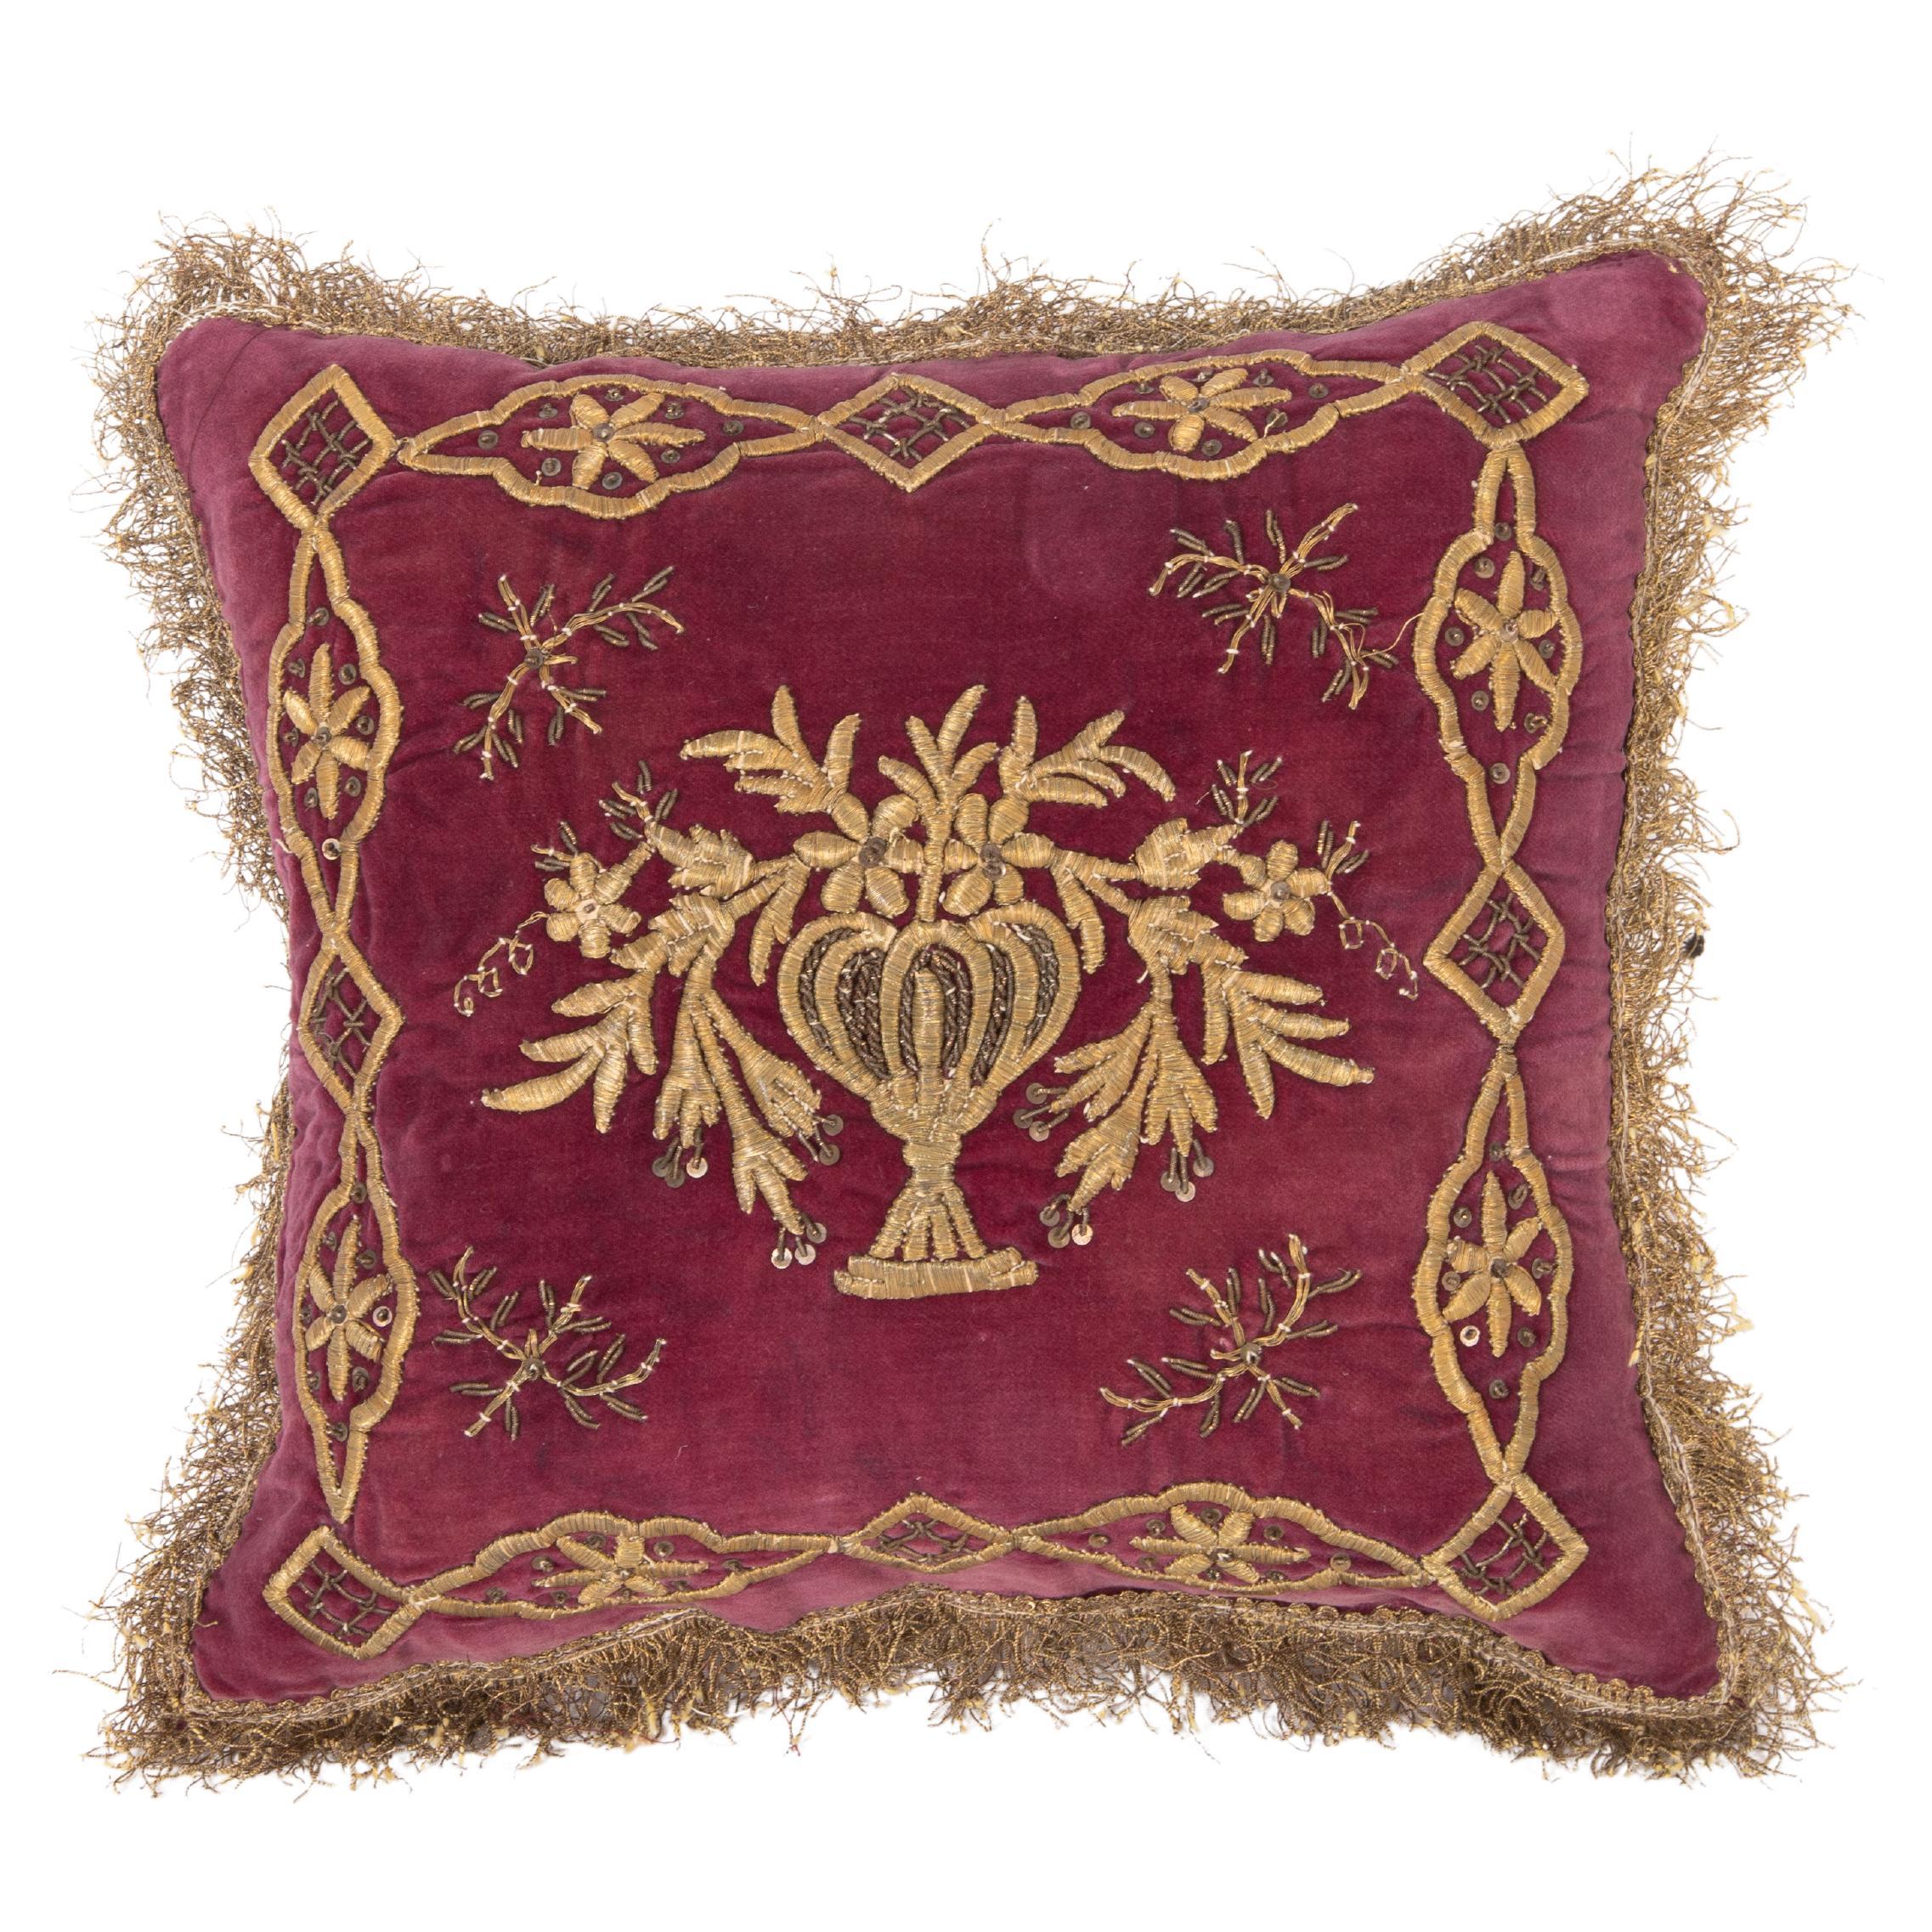 Antique Ottoman Velvet Sarma Pillow Cover, Early 20th C.